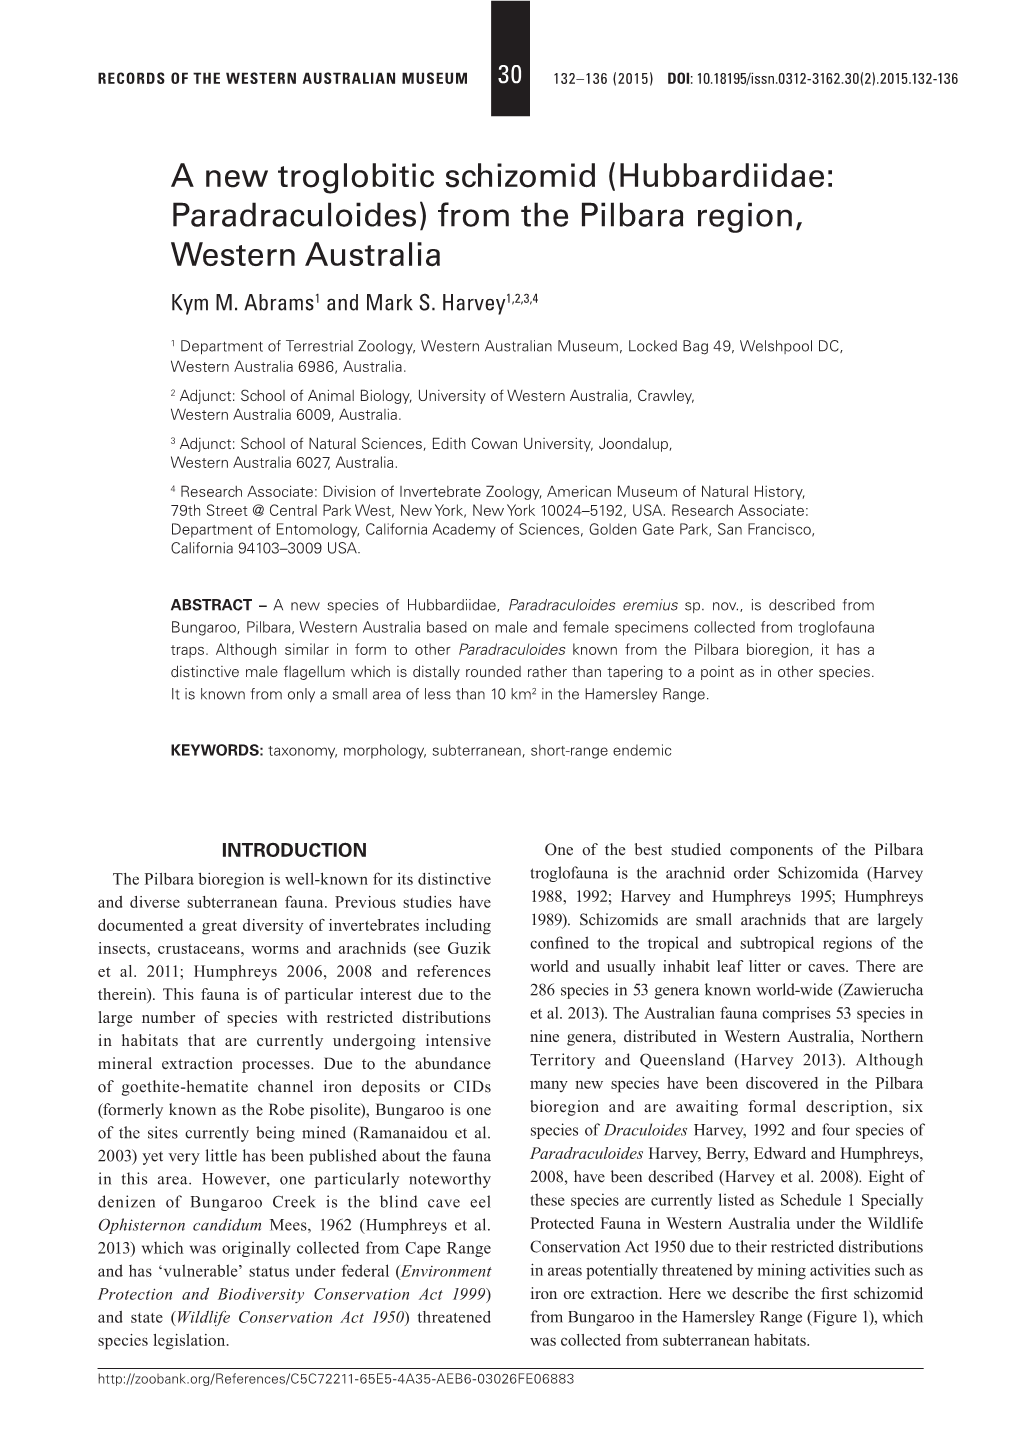 A New Troglobitic Schizomid (Hubbardiidae: Paradraculoides) from the Pilbara Region, Western Australia Kym M